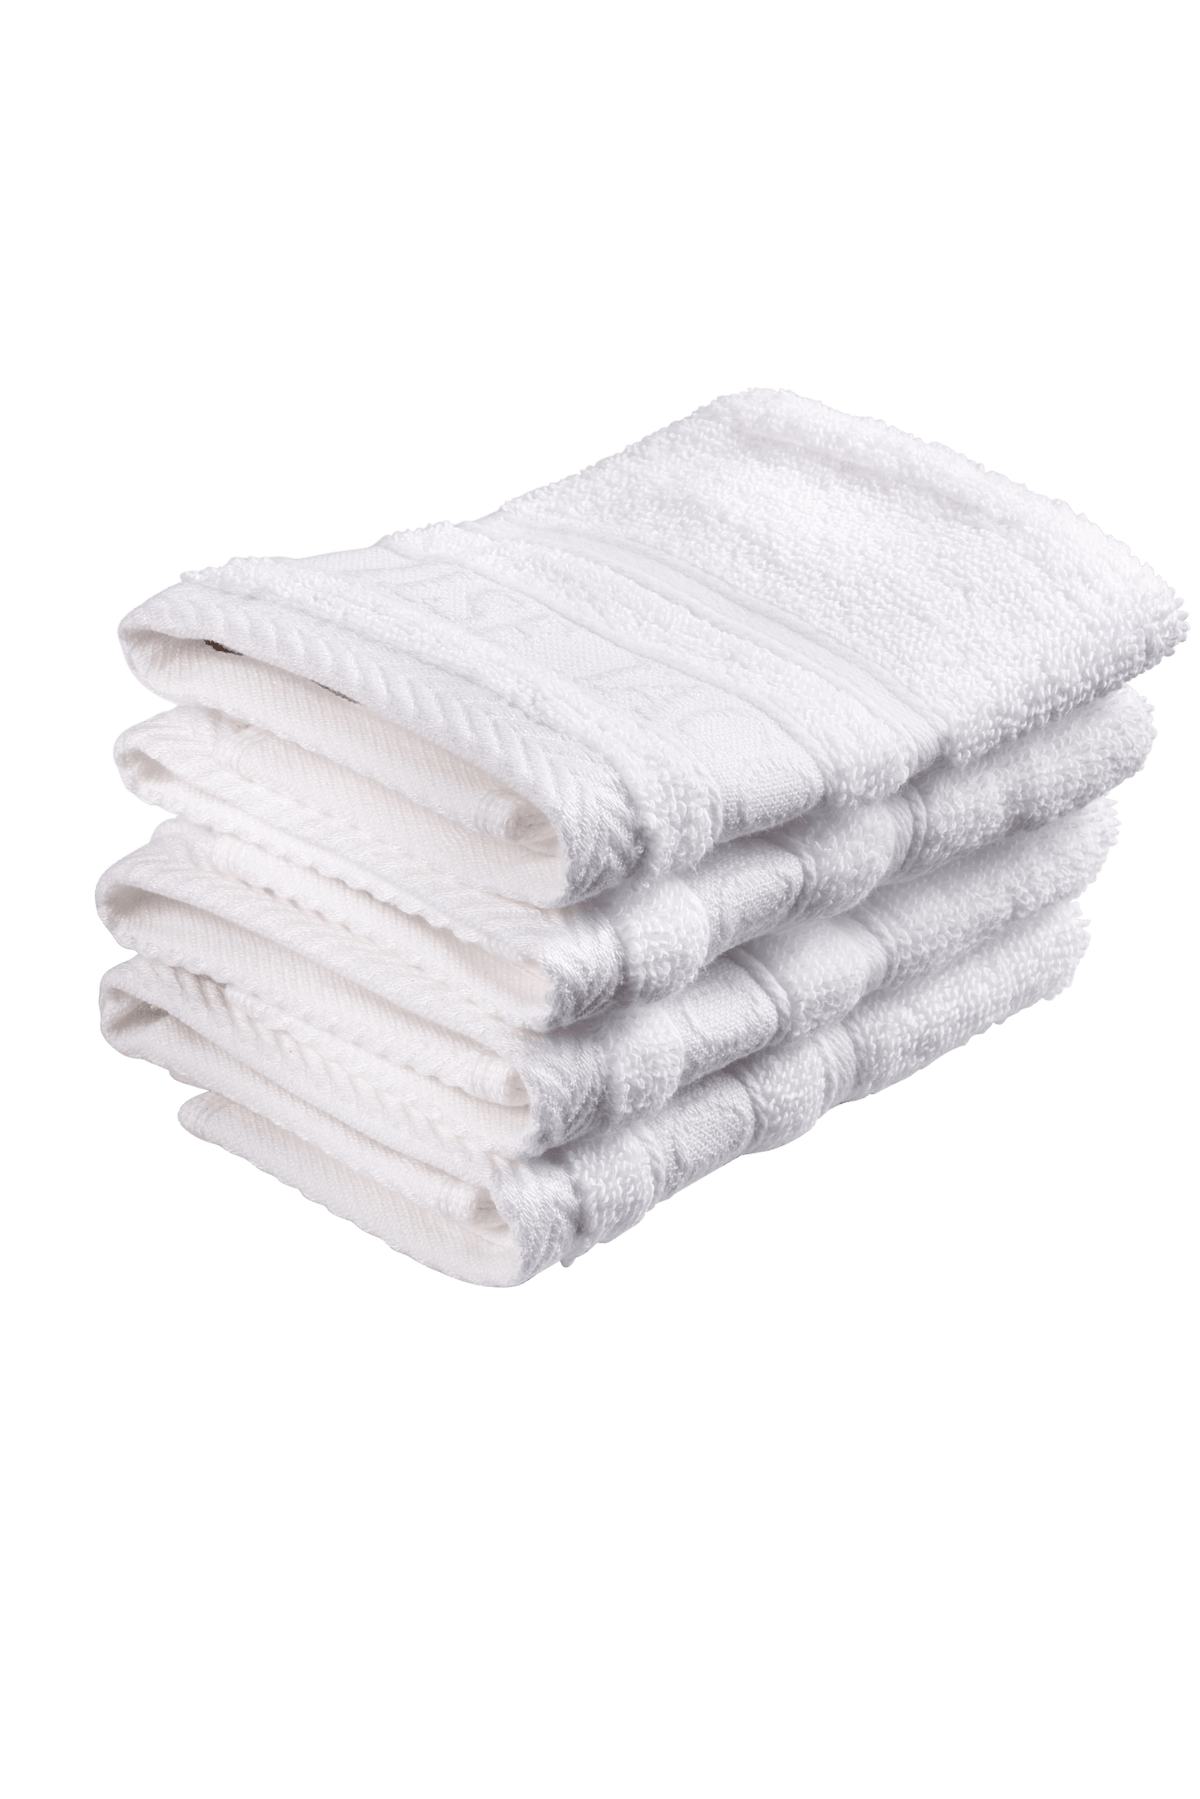 Wash cloth - White Cotton